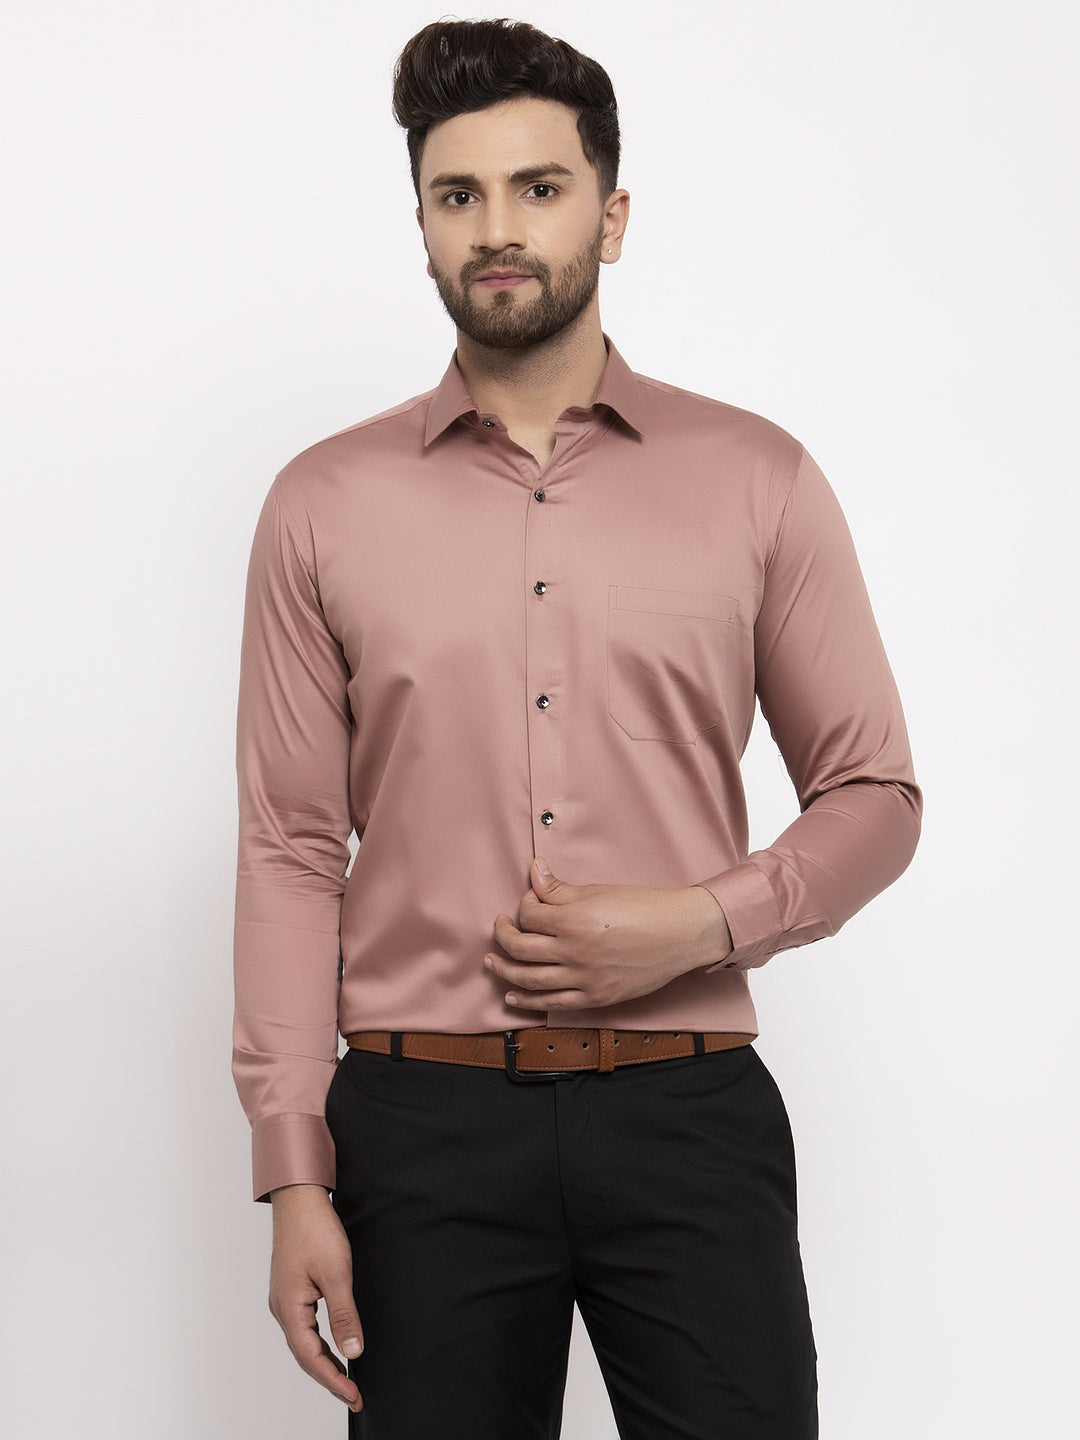 Jainish Brown Men's Cotton Solid Formal Shirt's